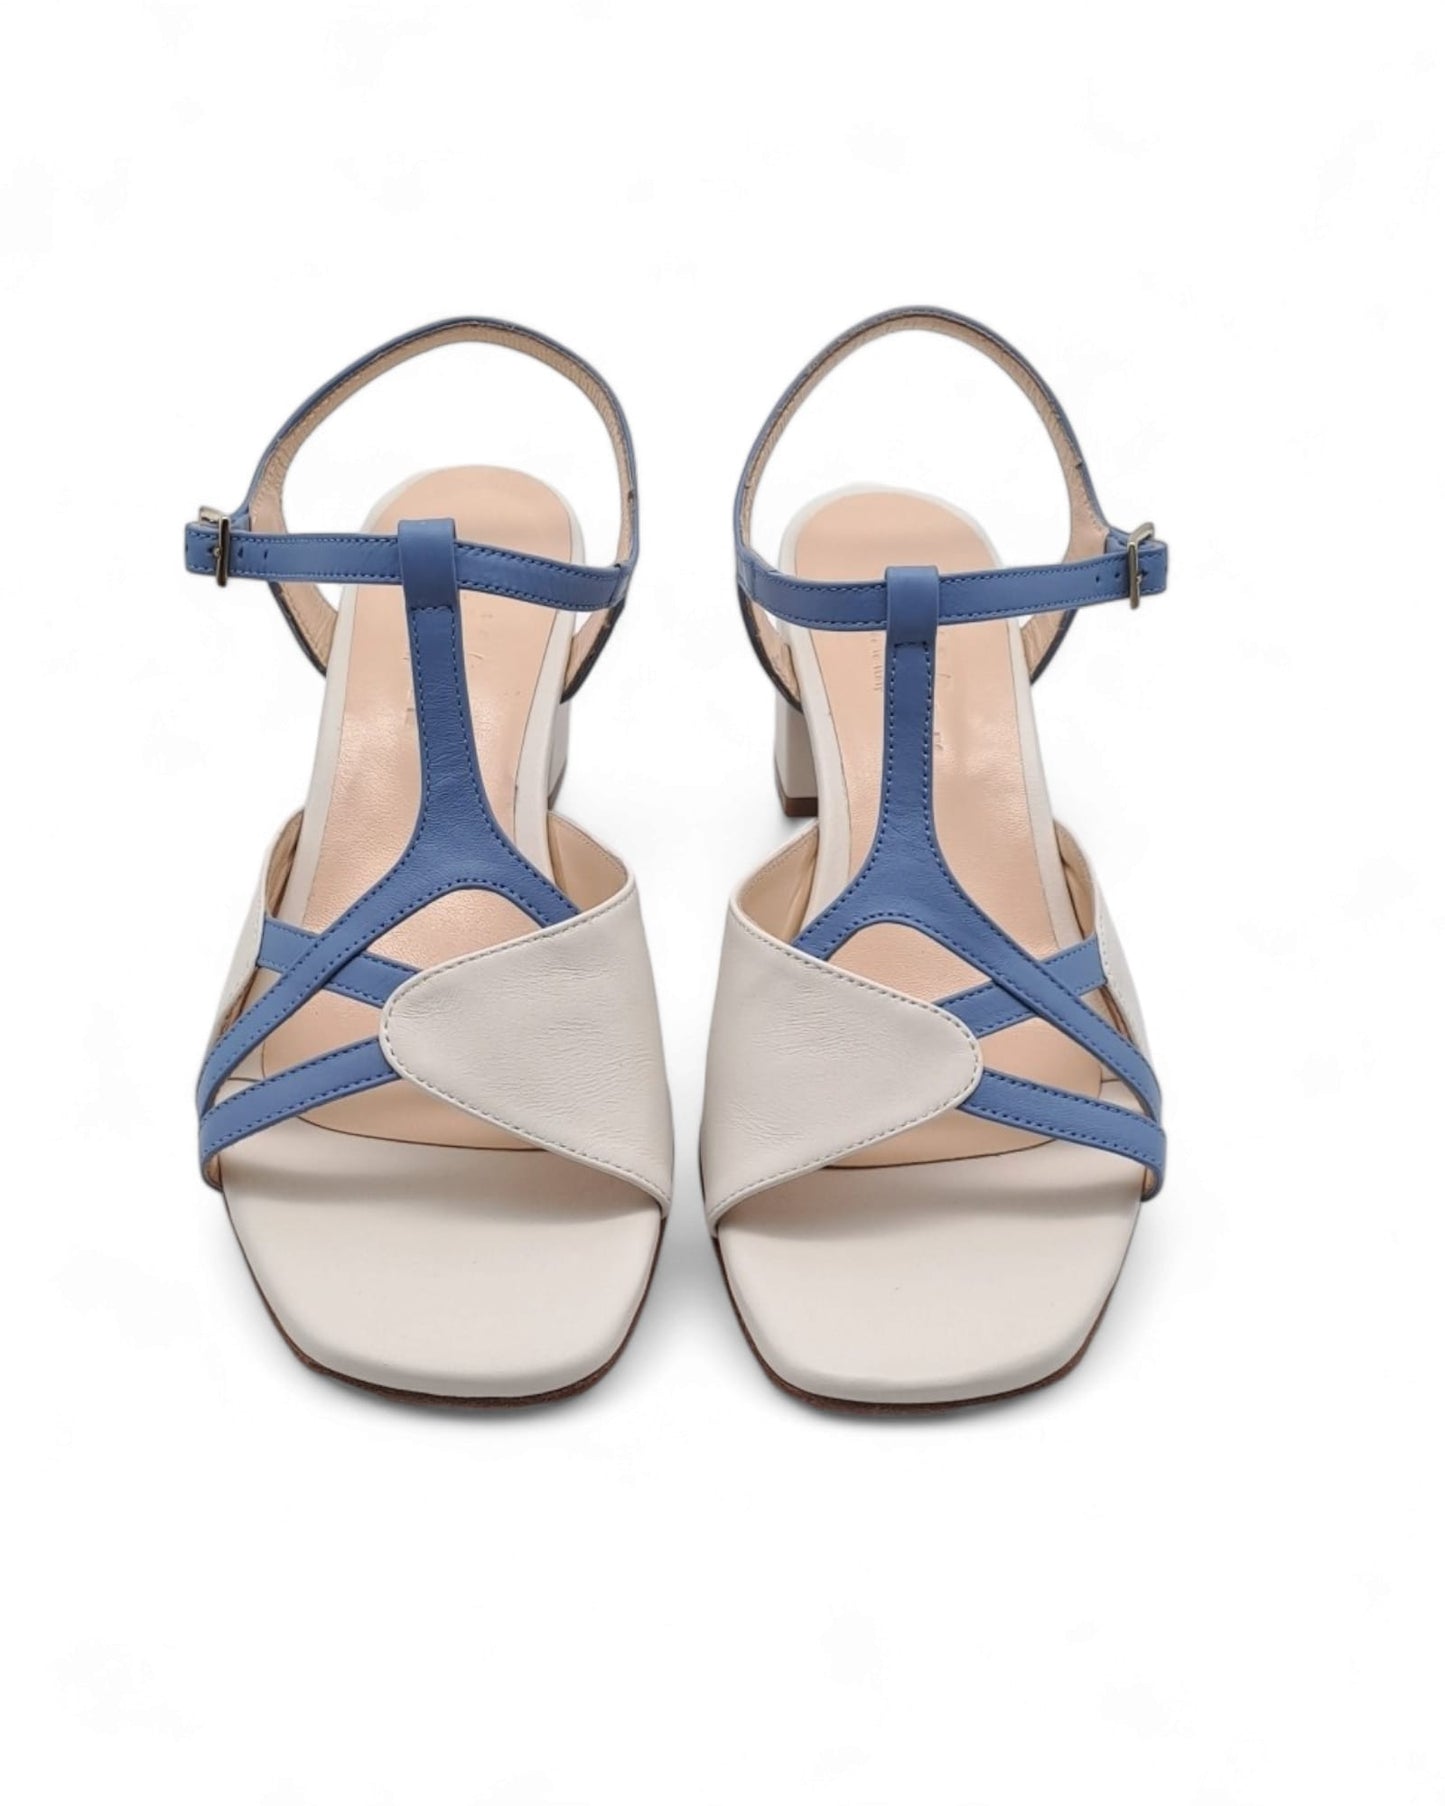 Dolores Nappa Milk/Ruvo sandal